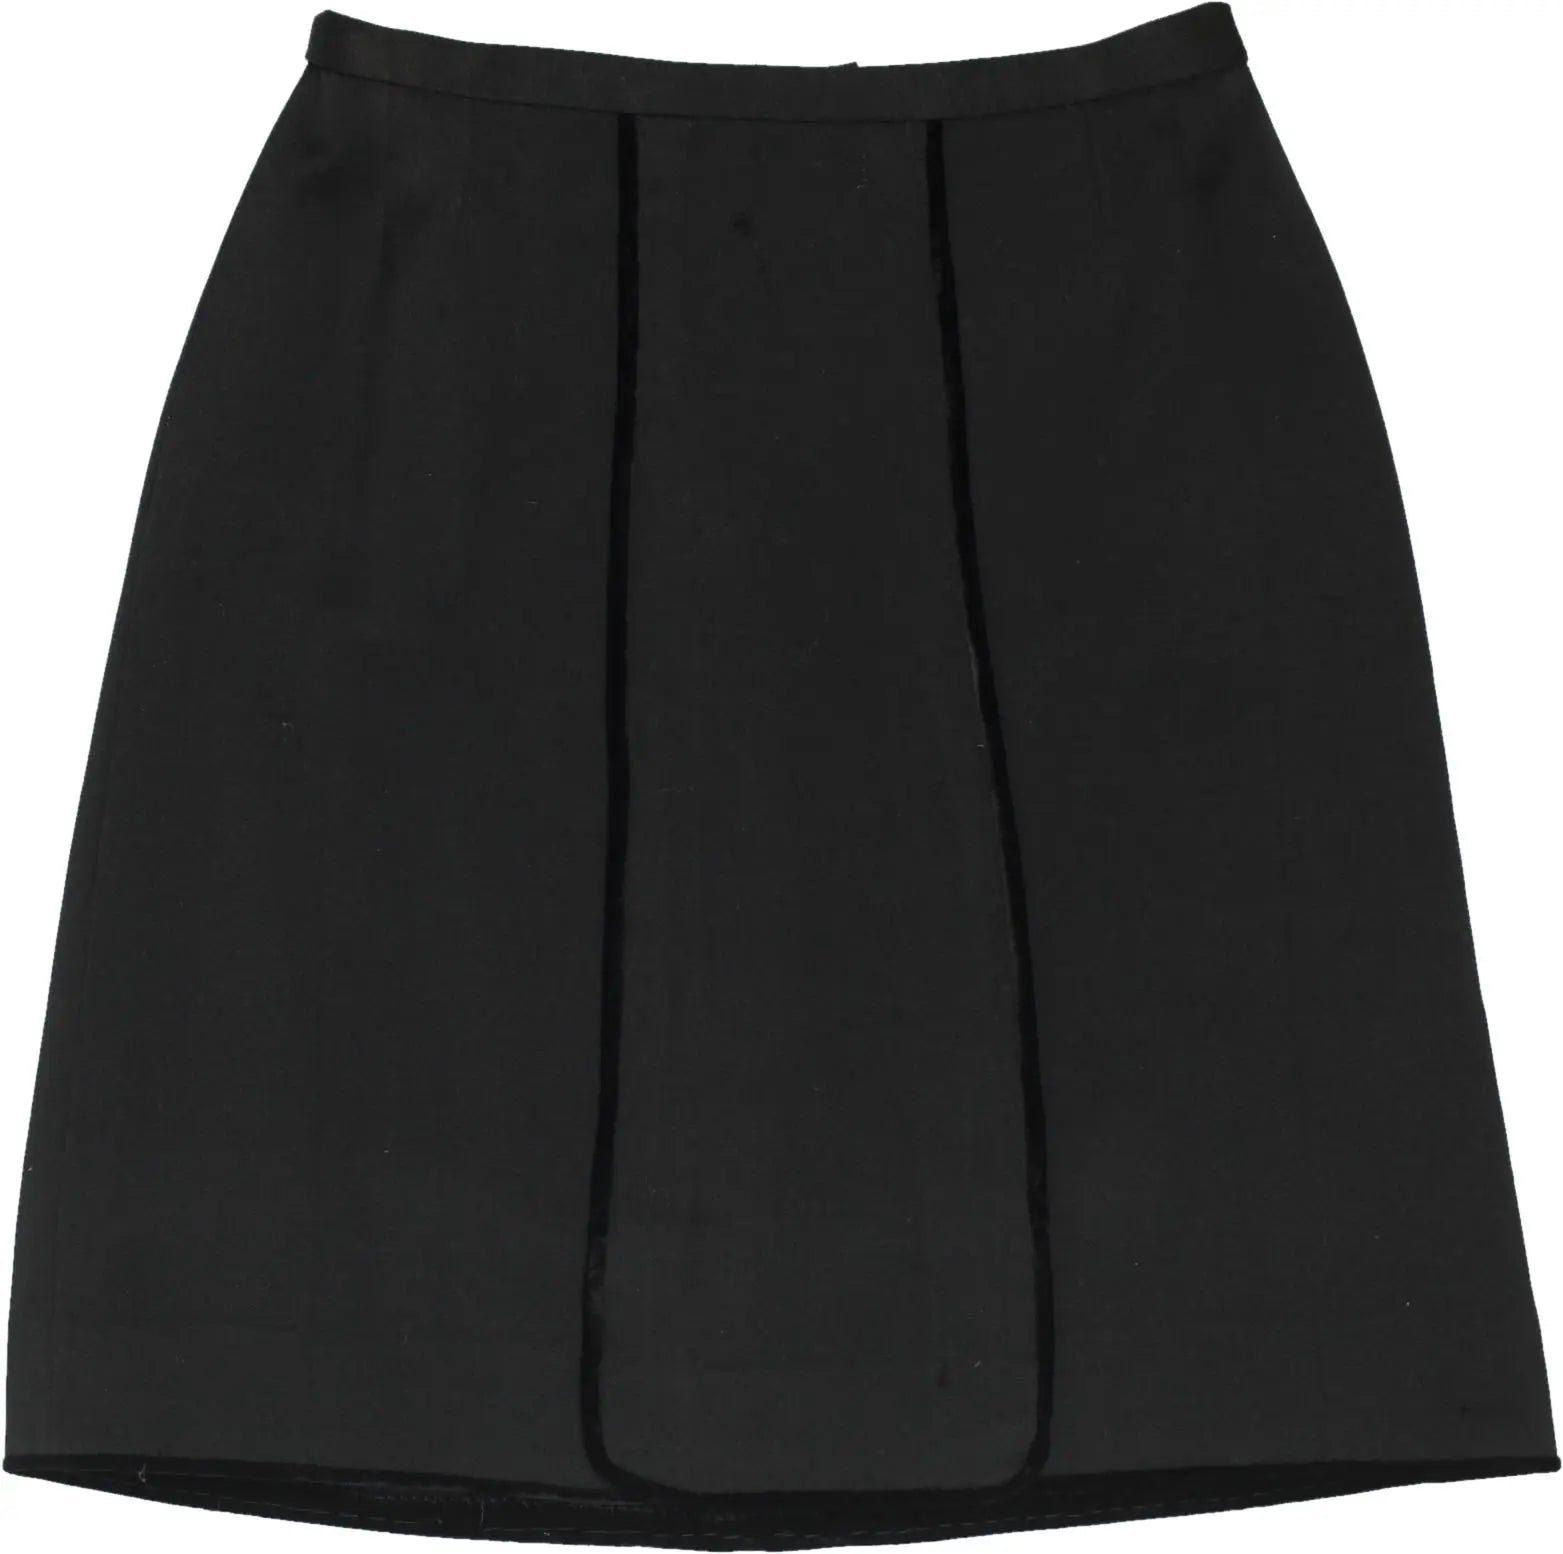 Handmade - 90s Black Skirt with Velvet Details- ThriftTale.com - Vintage and second handclothing